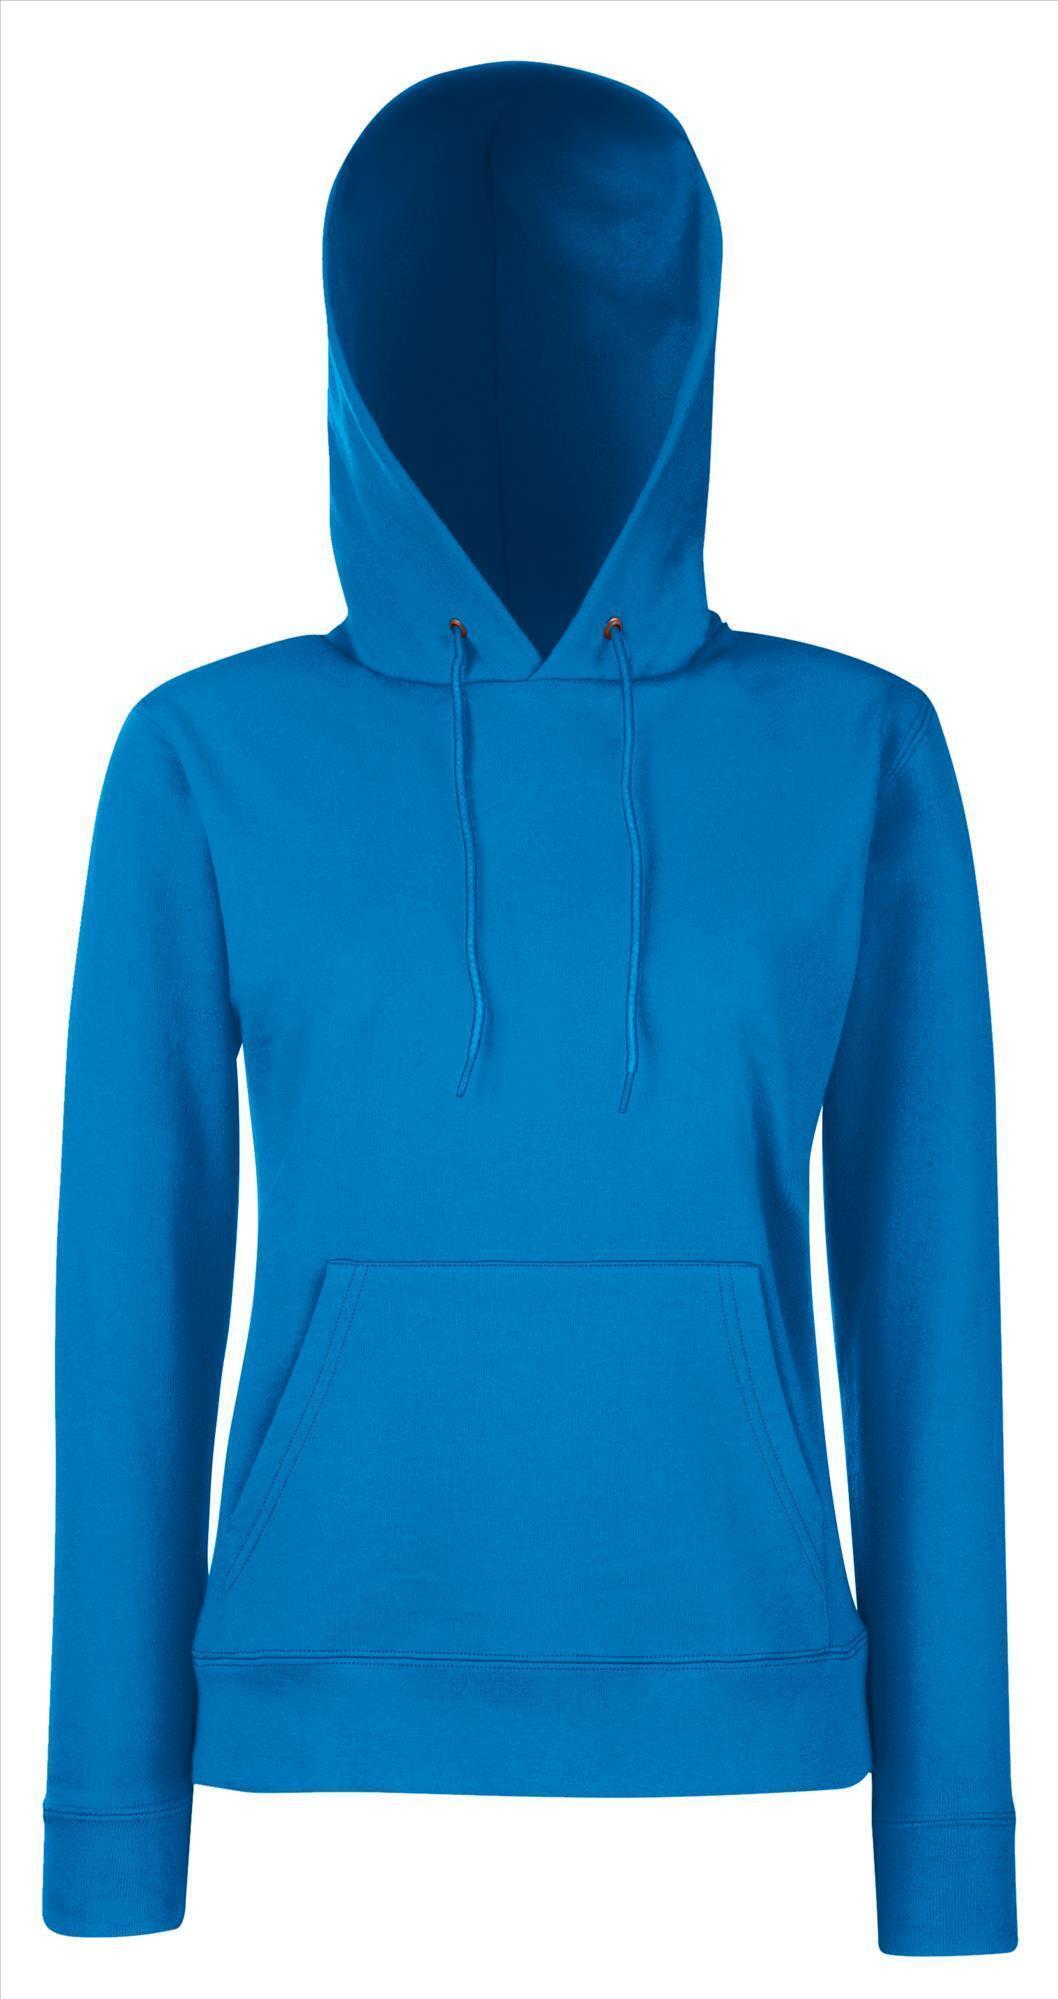 azuurblauw Dames sweater Lady-Fit met gevoerde capuchon blauw azuur